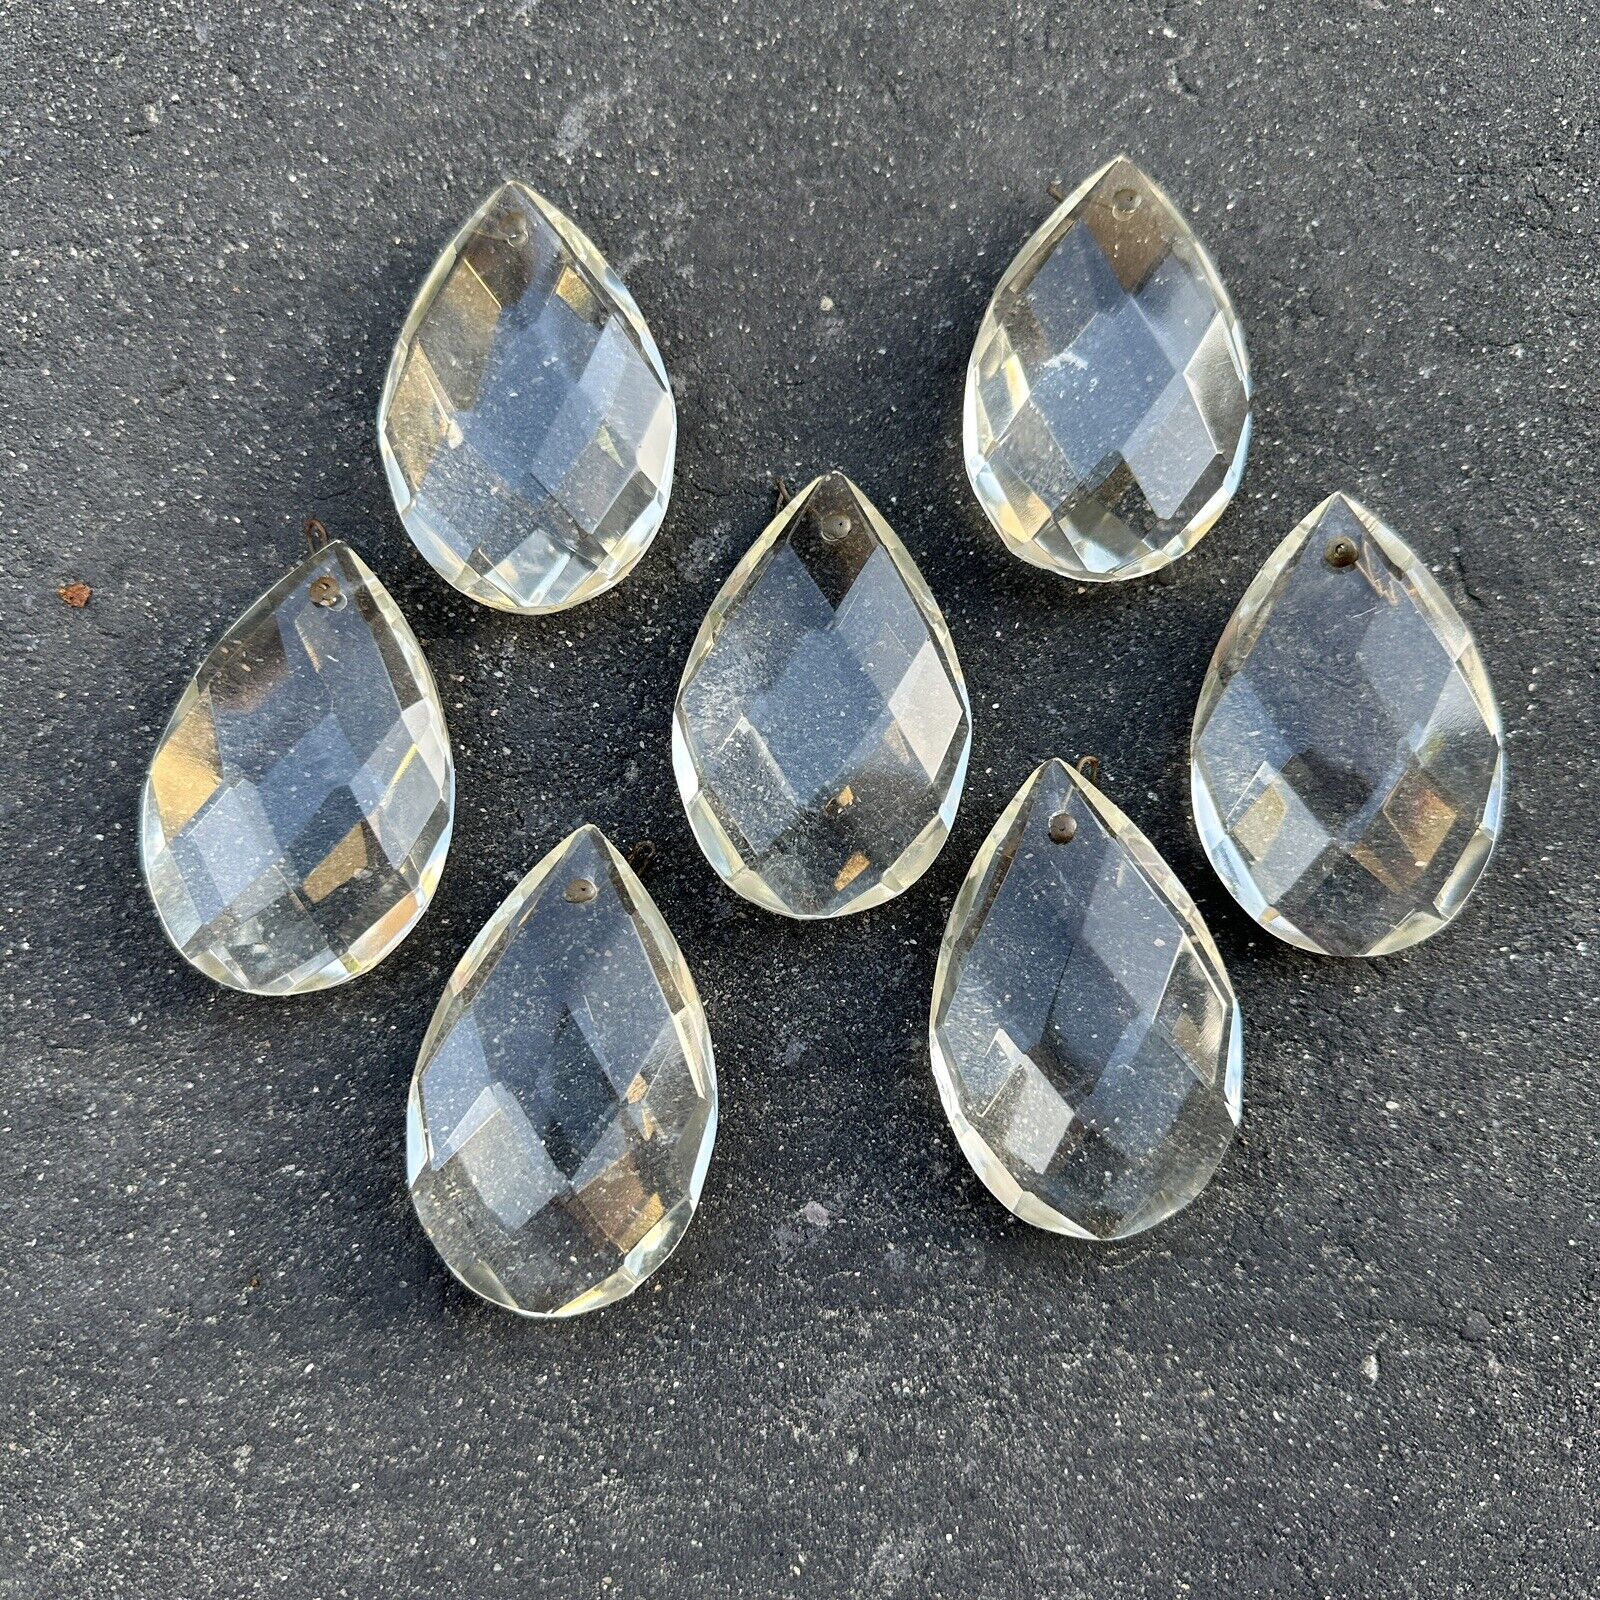 Vintage Lot of 10 Teardrop Chandelier Crystal Clear Pendeloques 2.5” Prisms